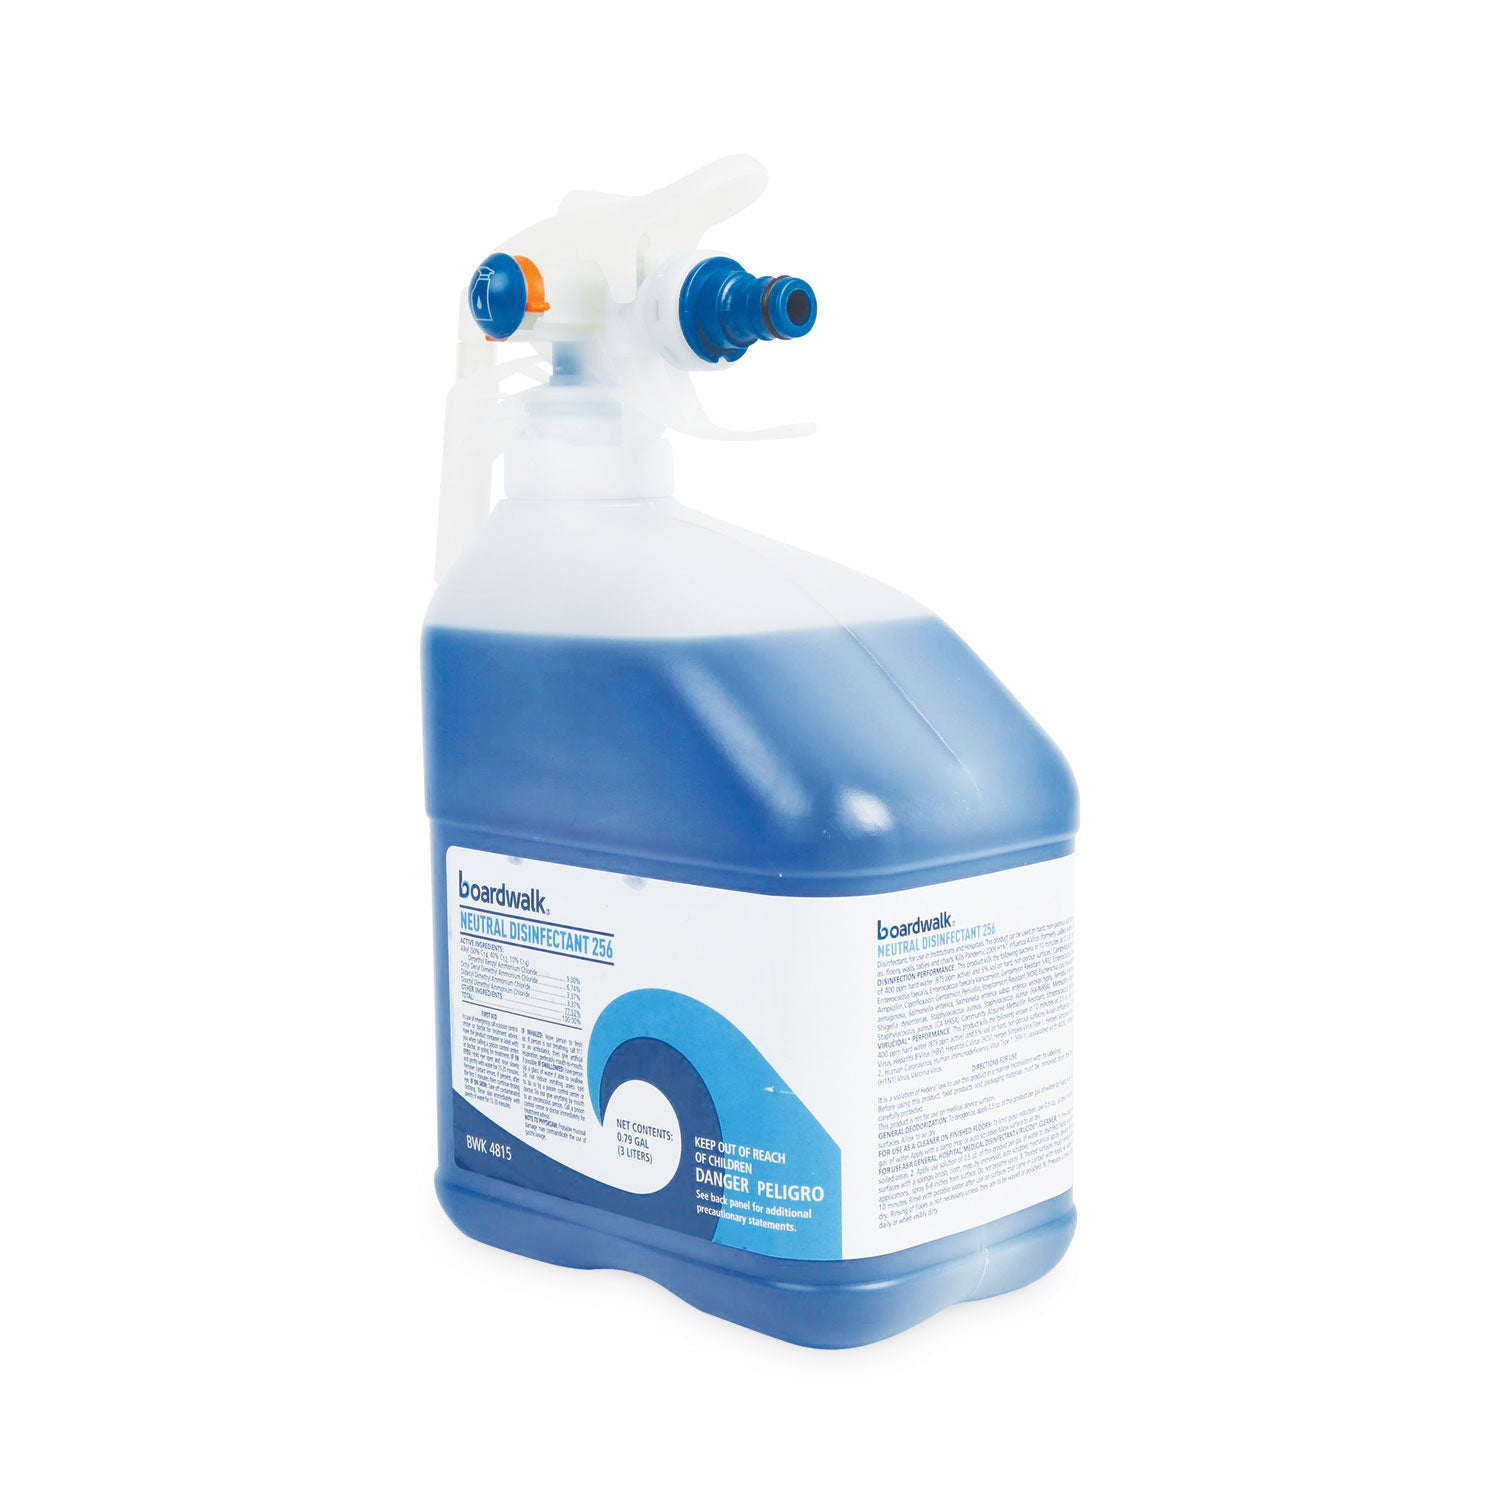 pdc-neutral-disinfectant-floral-scent-3-liter-bottle-2-carton_bwk4815 - 4